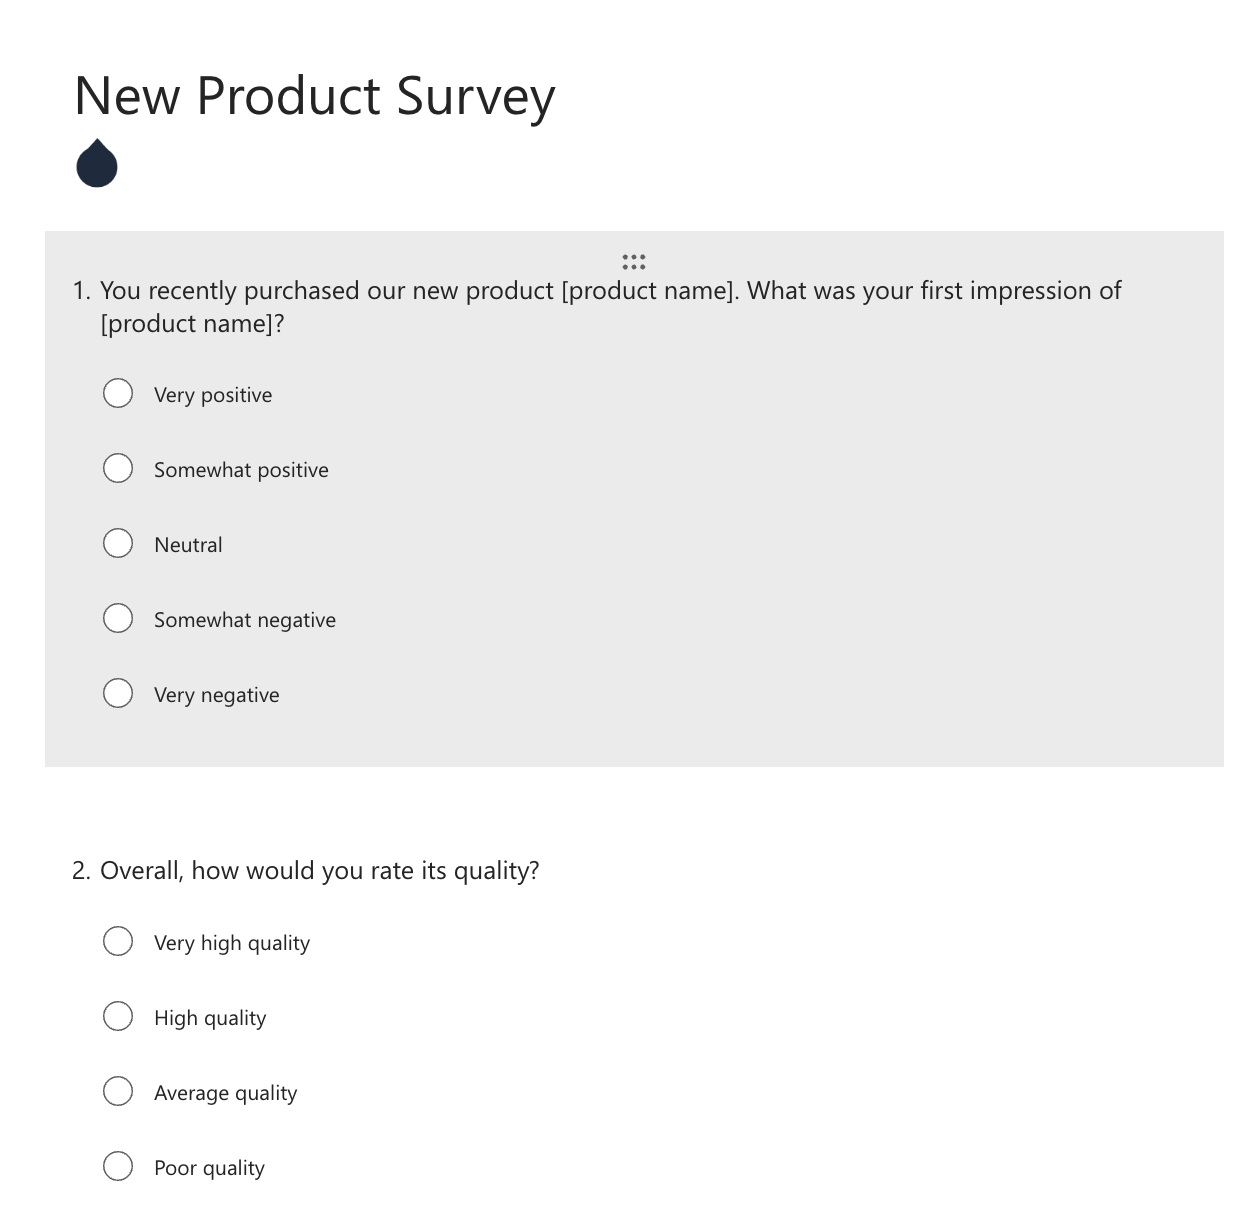 New Product Survey 